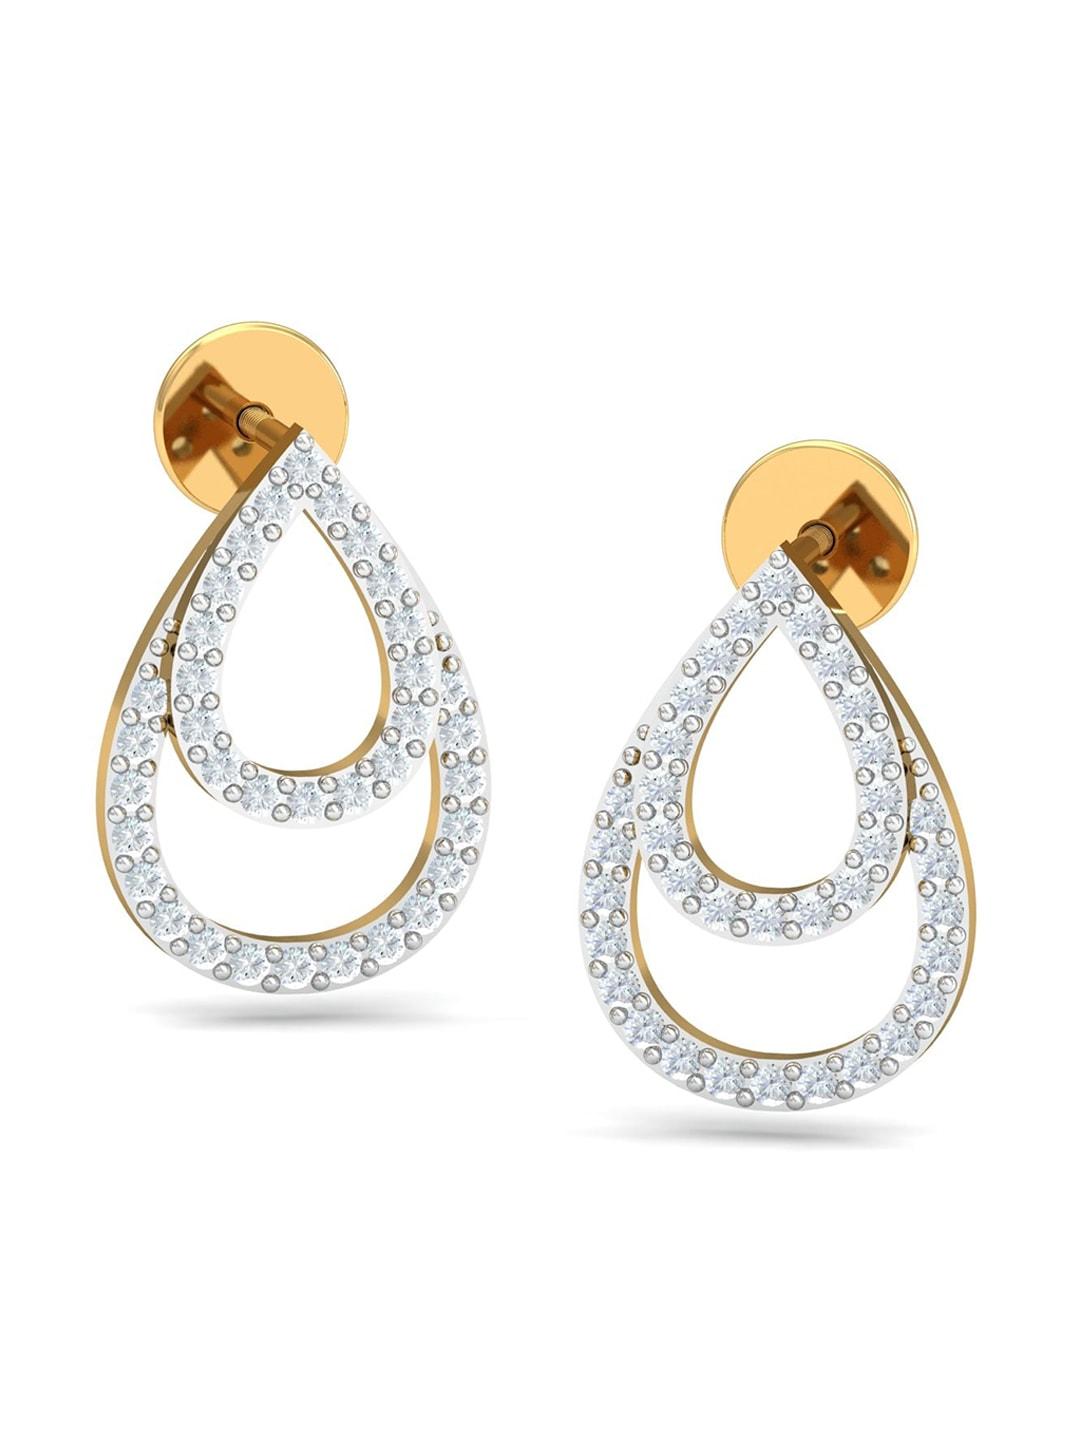 KUBERBOX Pretty Pear 18KT Gold Diamond-Studded Stud Earrings-2.21gm